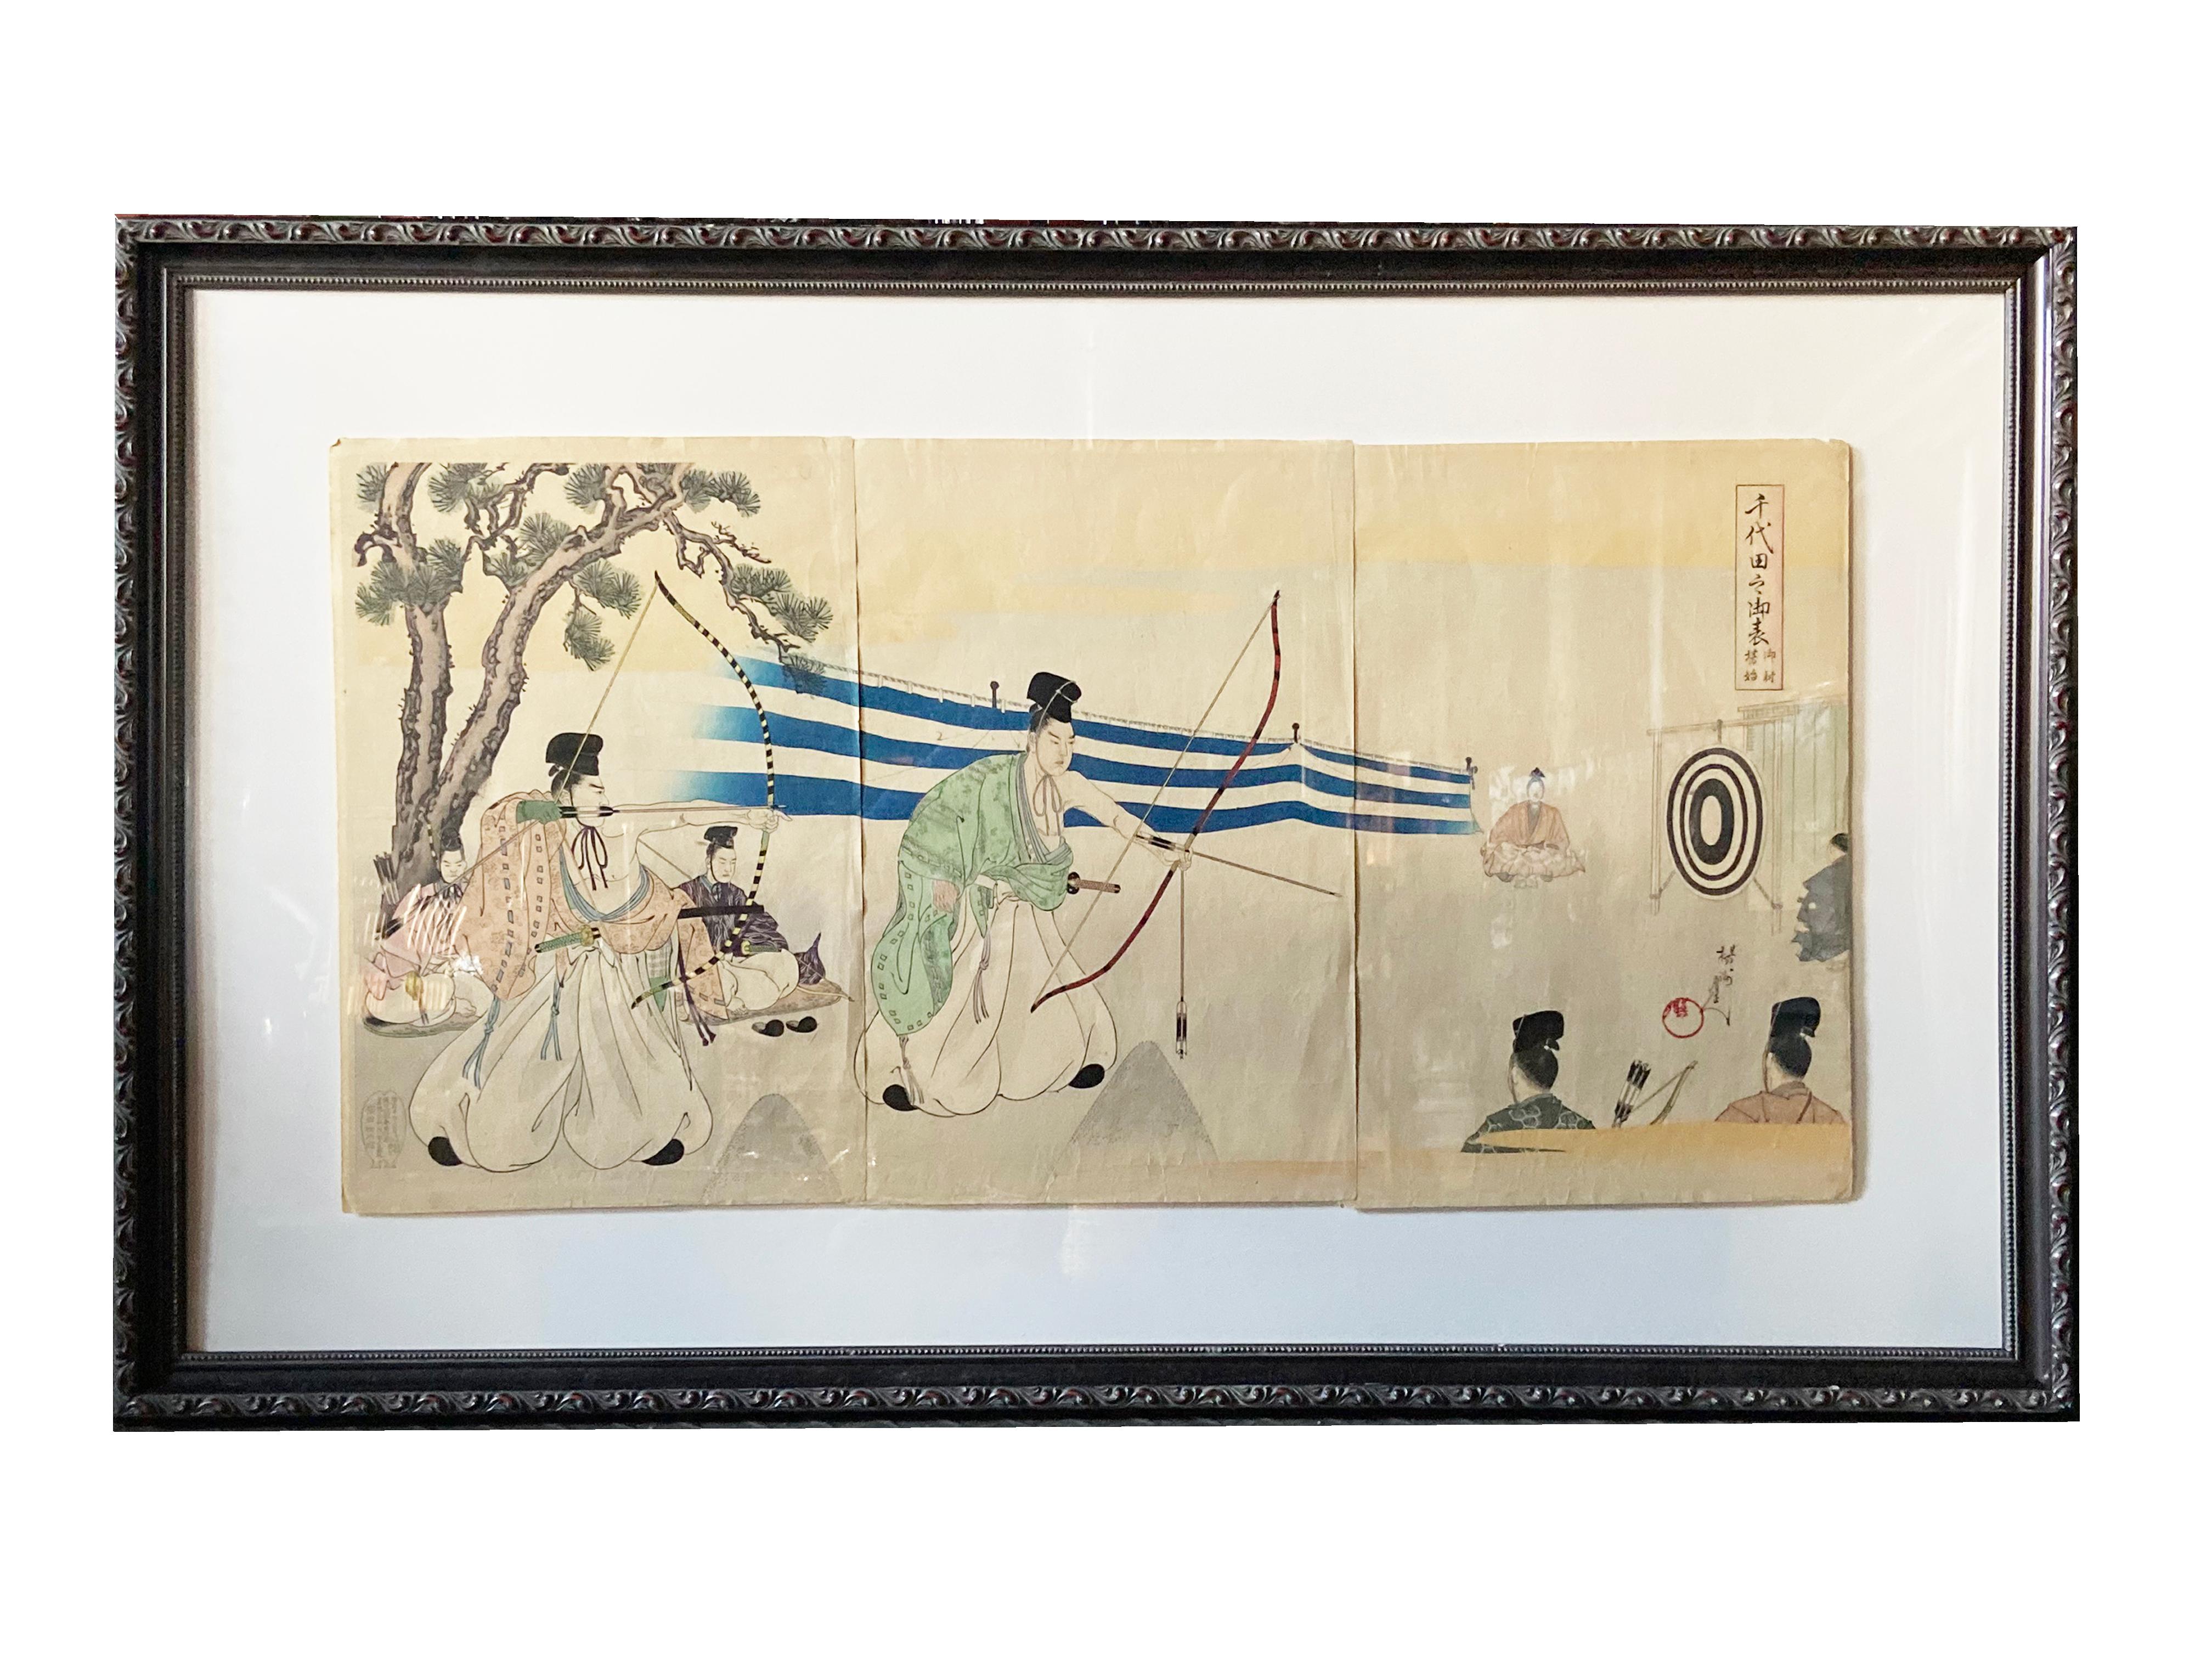 Japanese Meiji Chikanobu Toyohara Framed Woodblock Print with Archery Tournament For Sale 2